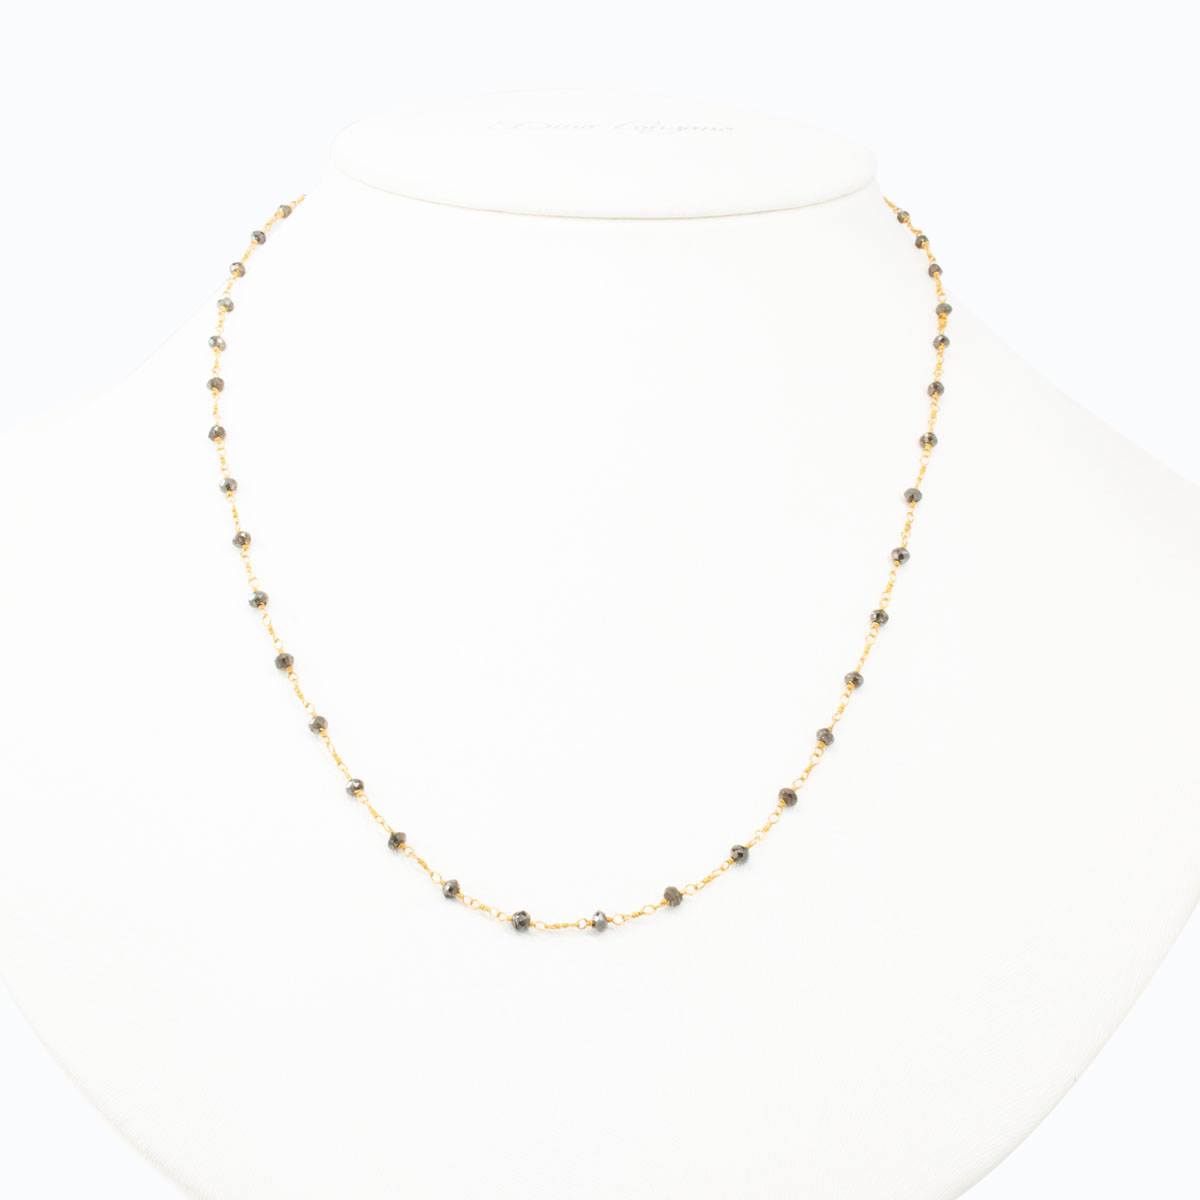 Black Diamond Bead Necklace, 18k Yellow Gold